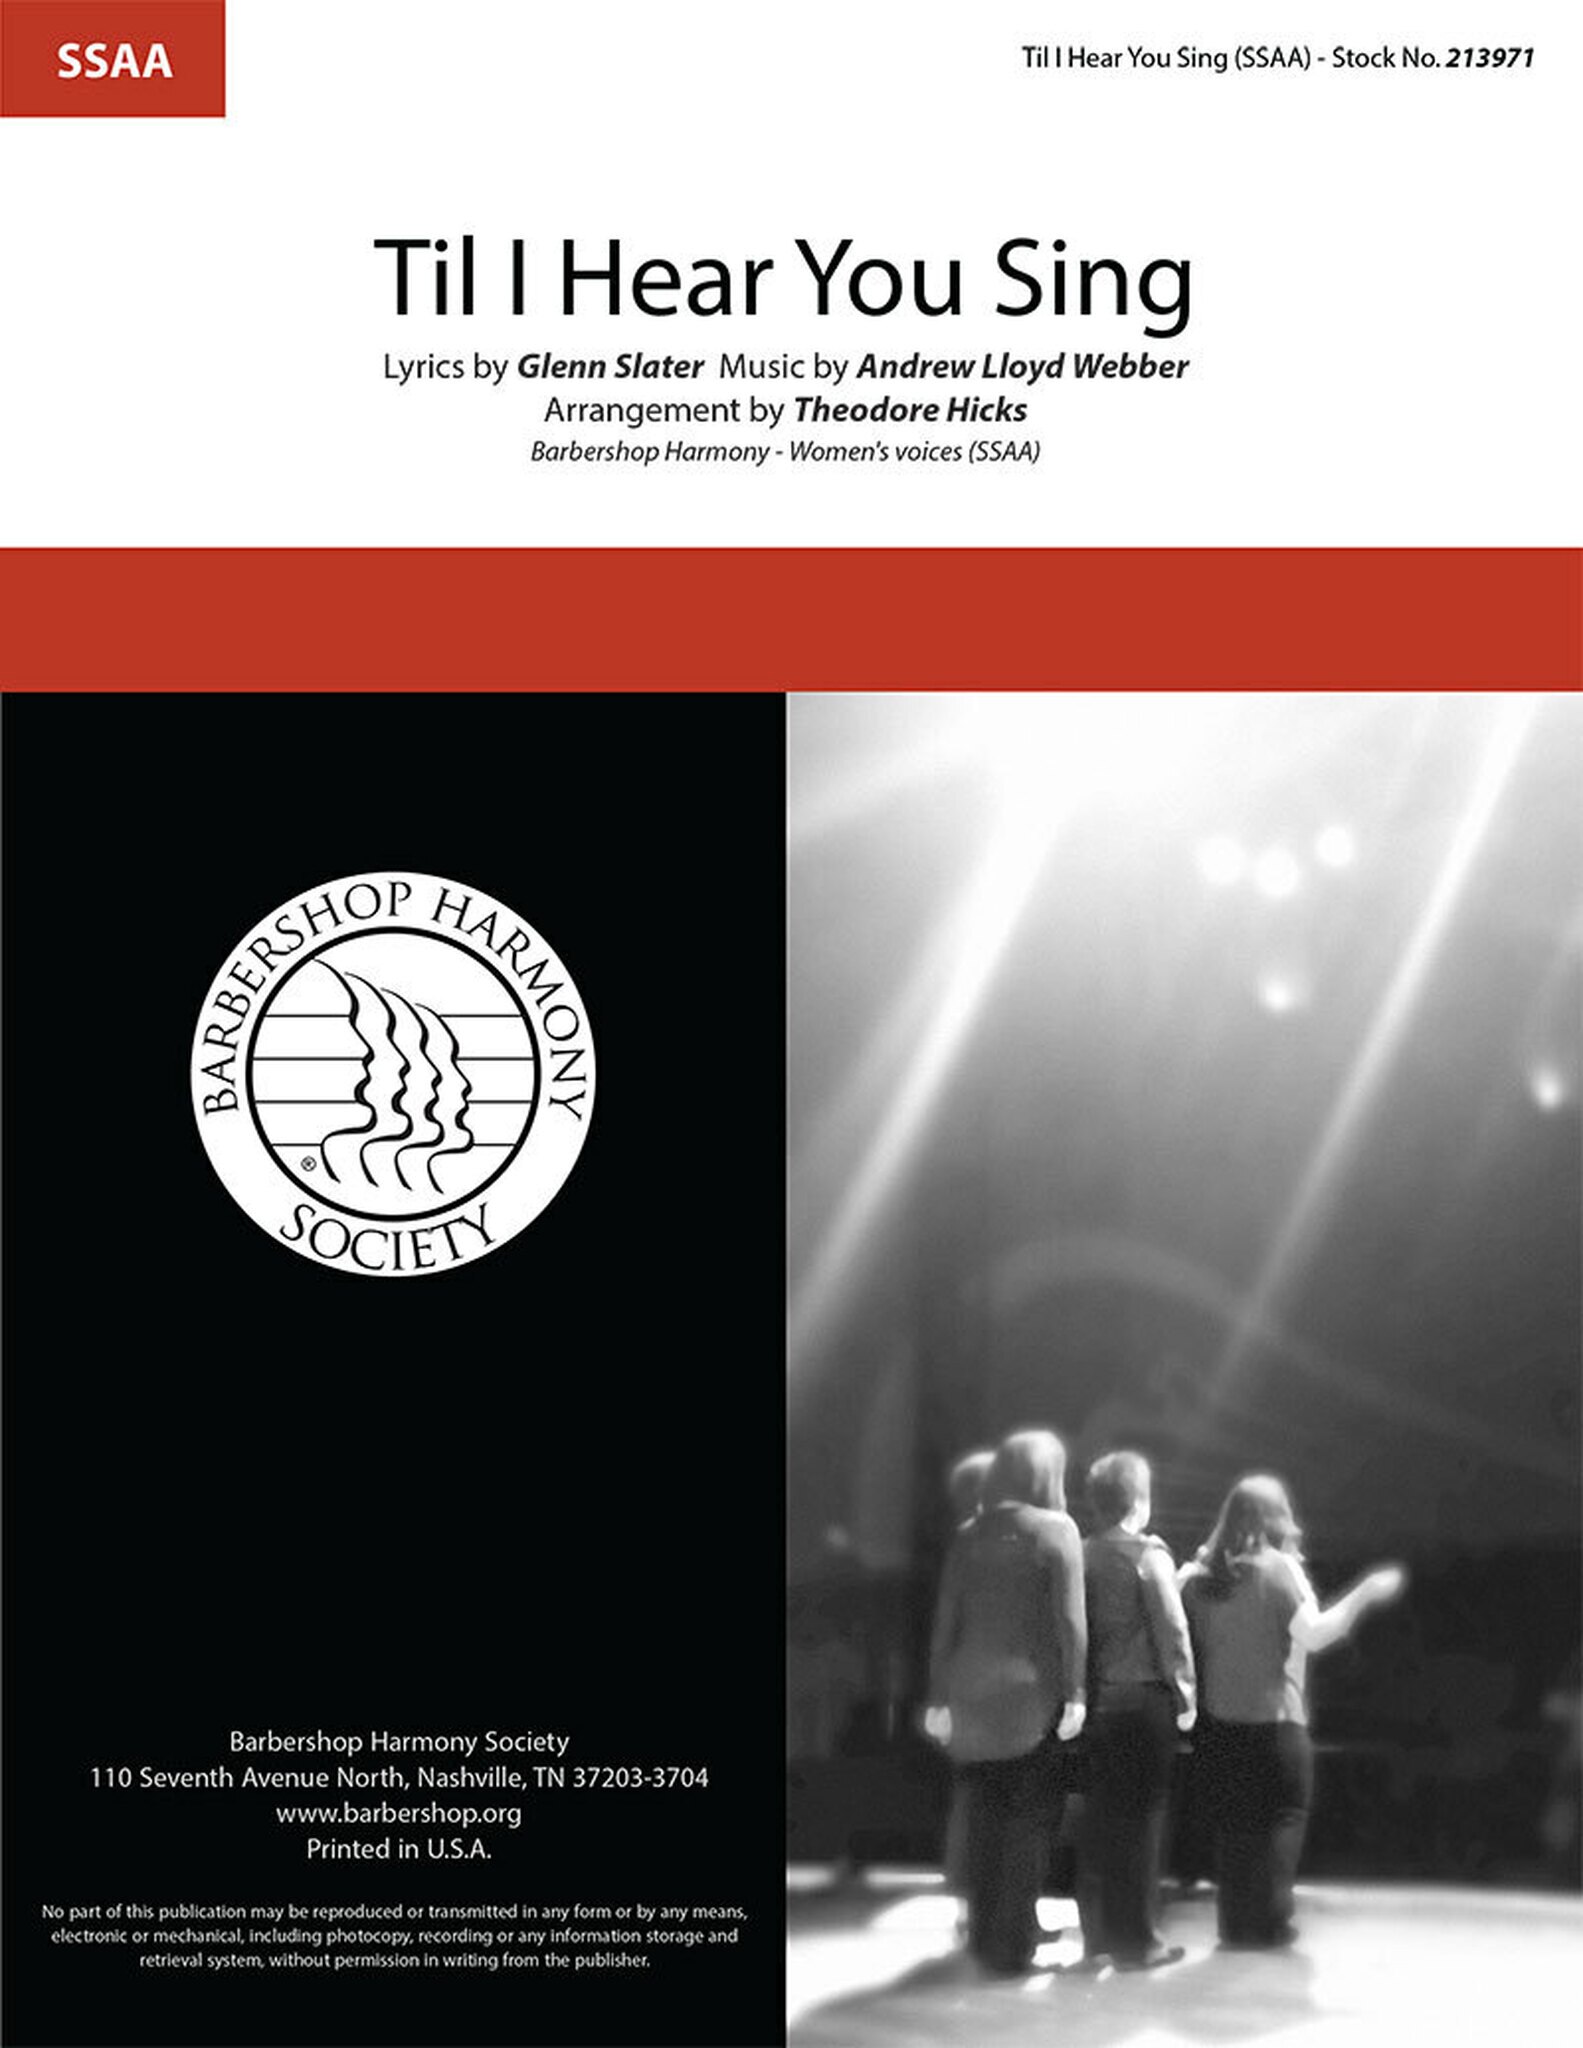 'Til I Hear You Sing : SSAA : Theo Hicks : Andrew Lloyd Webber : Love Never Dies : Songbook : 00363317